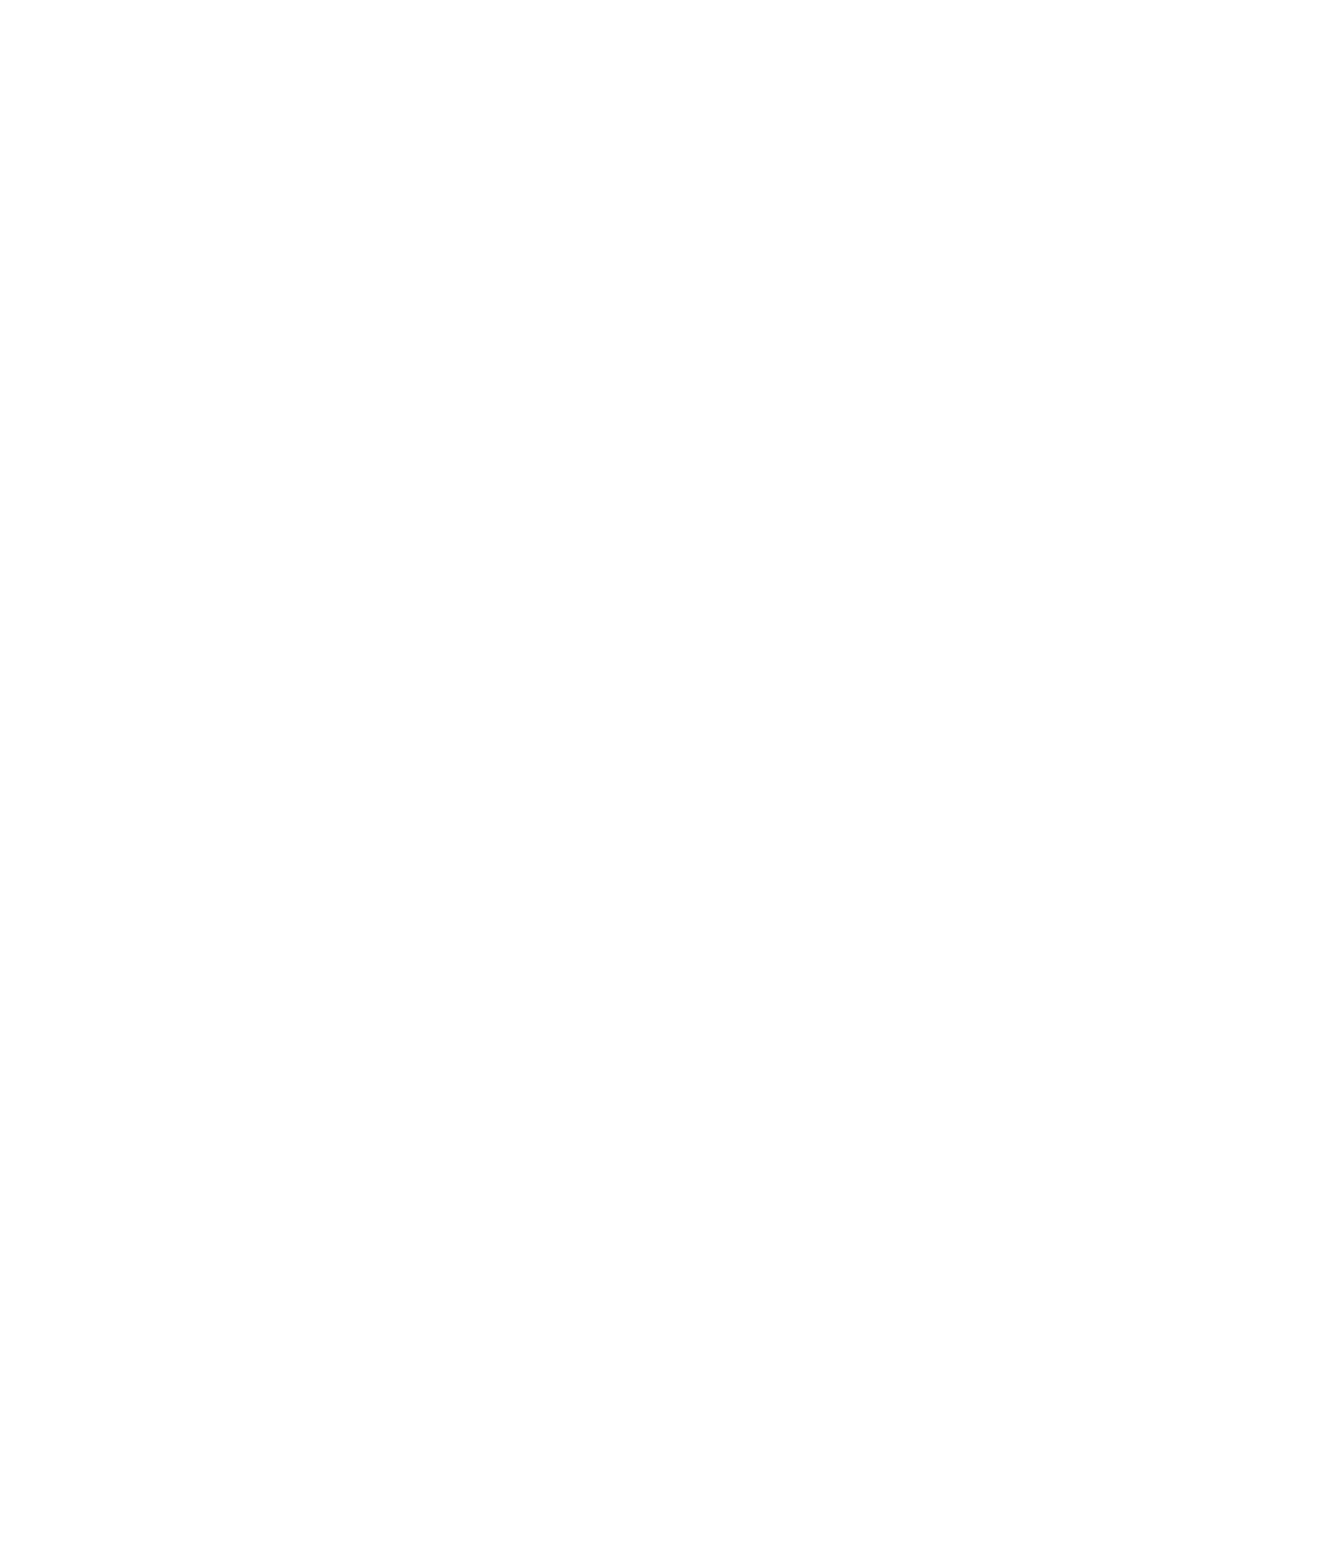 realtor logo png